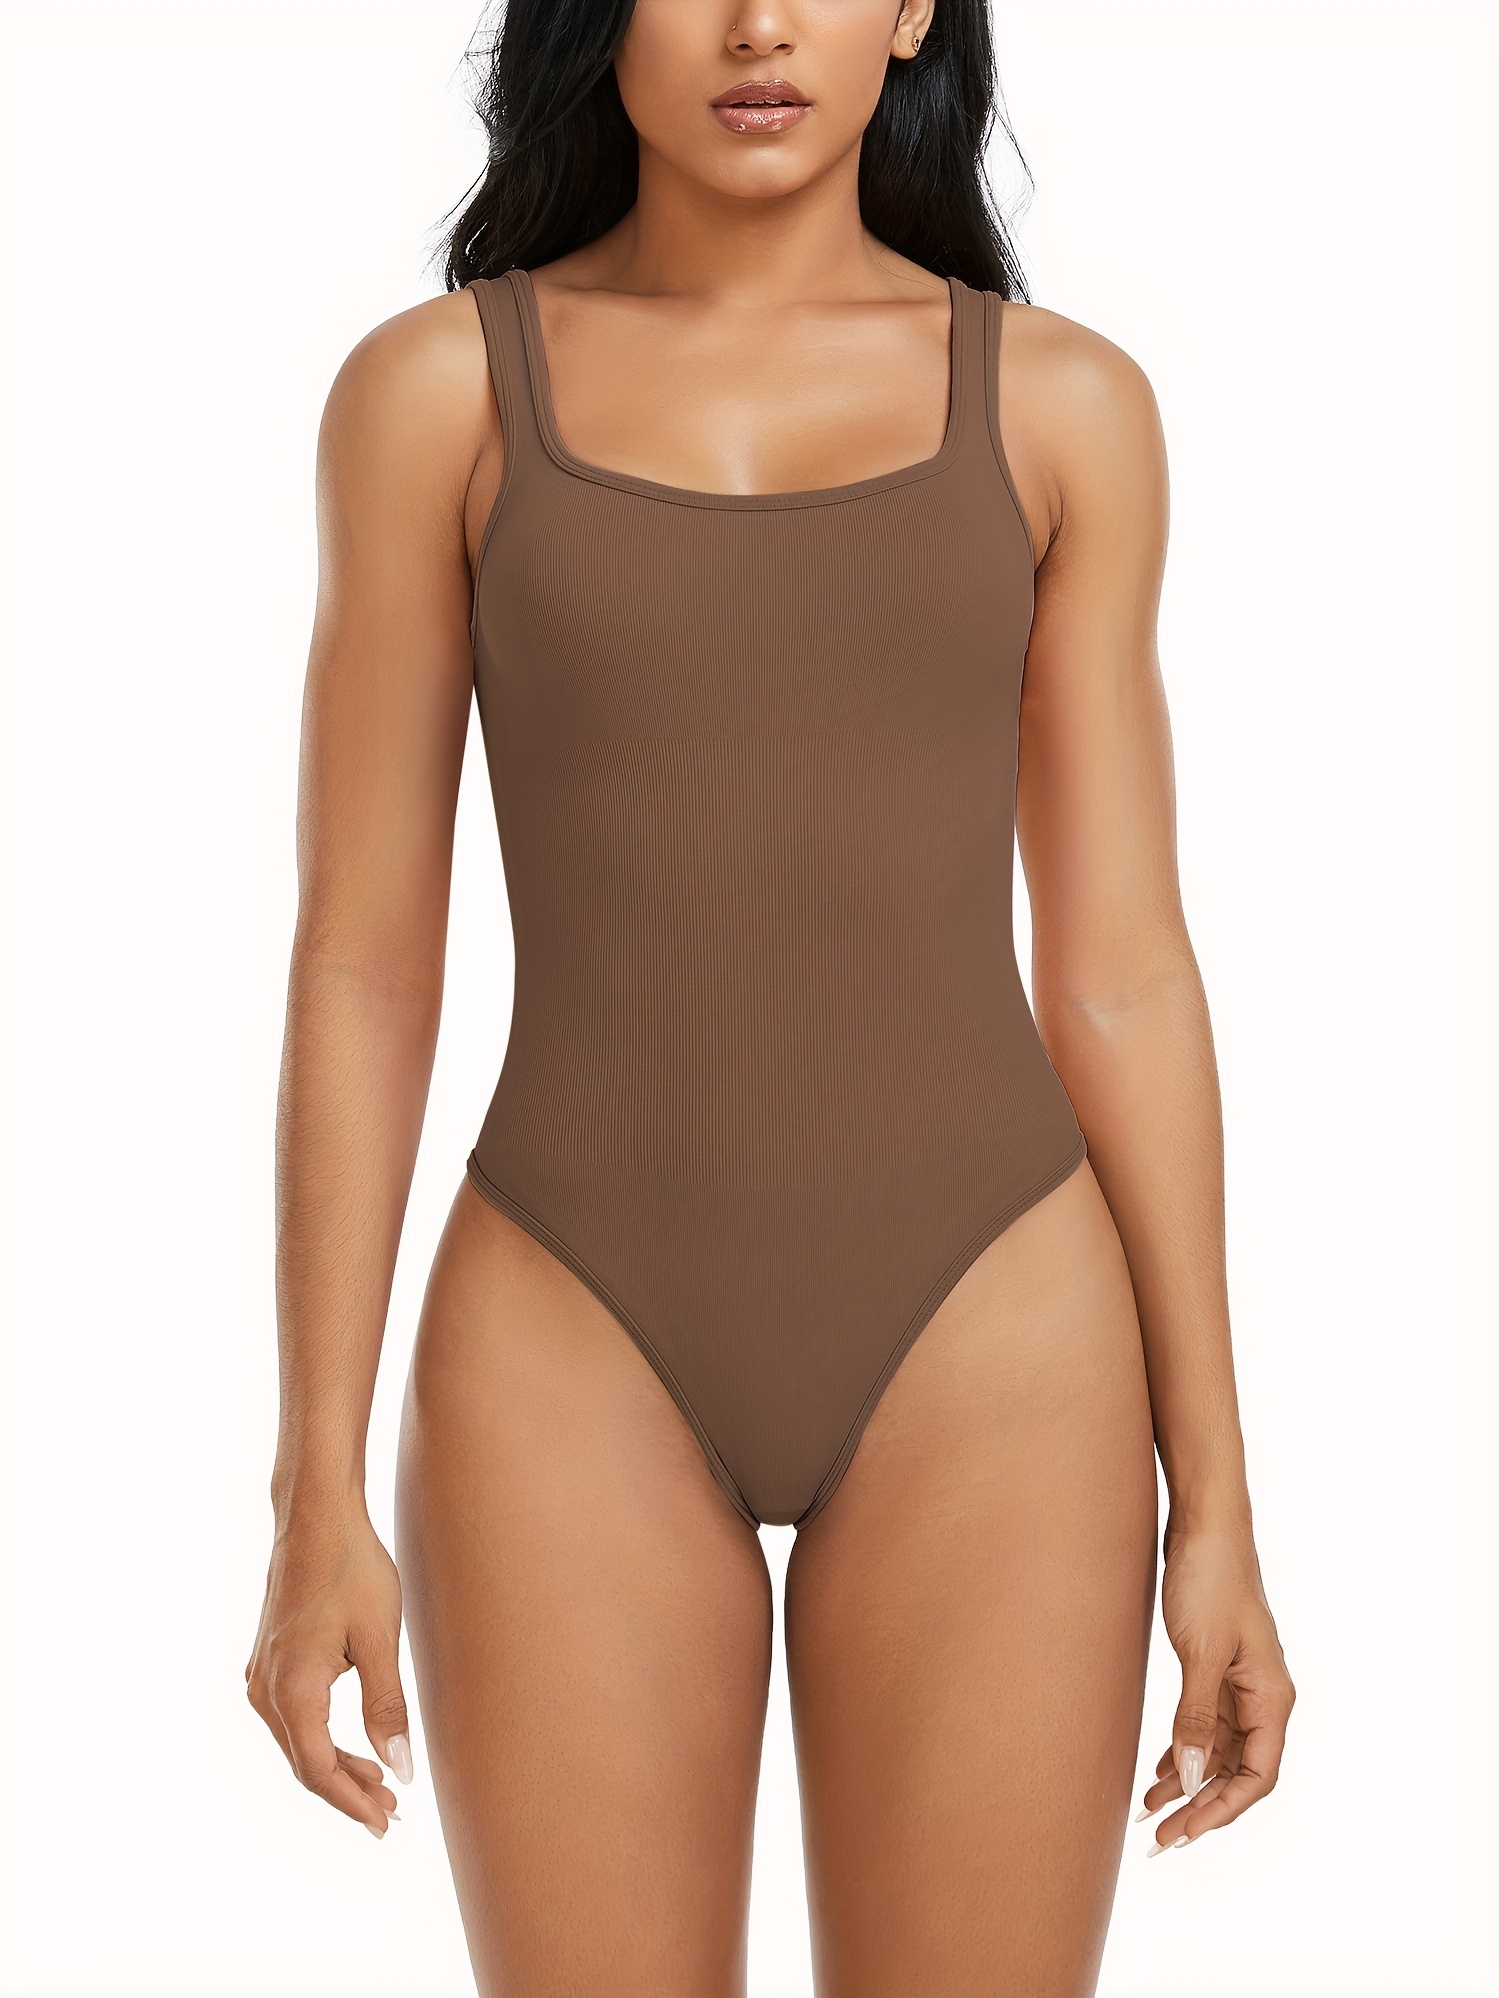 Bodysuit Women Sleeveless Top Blouse Leotard Body Suit Tank Clothing yoga  Outfit